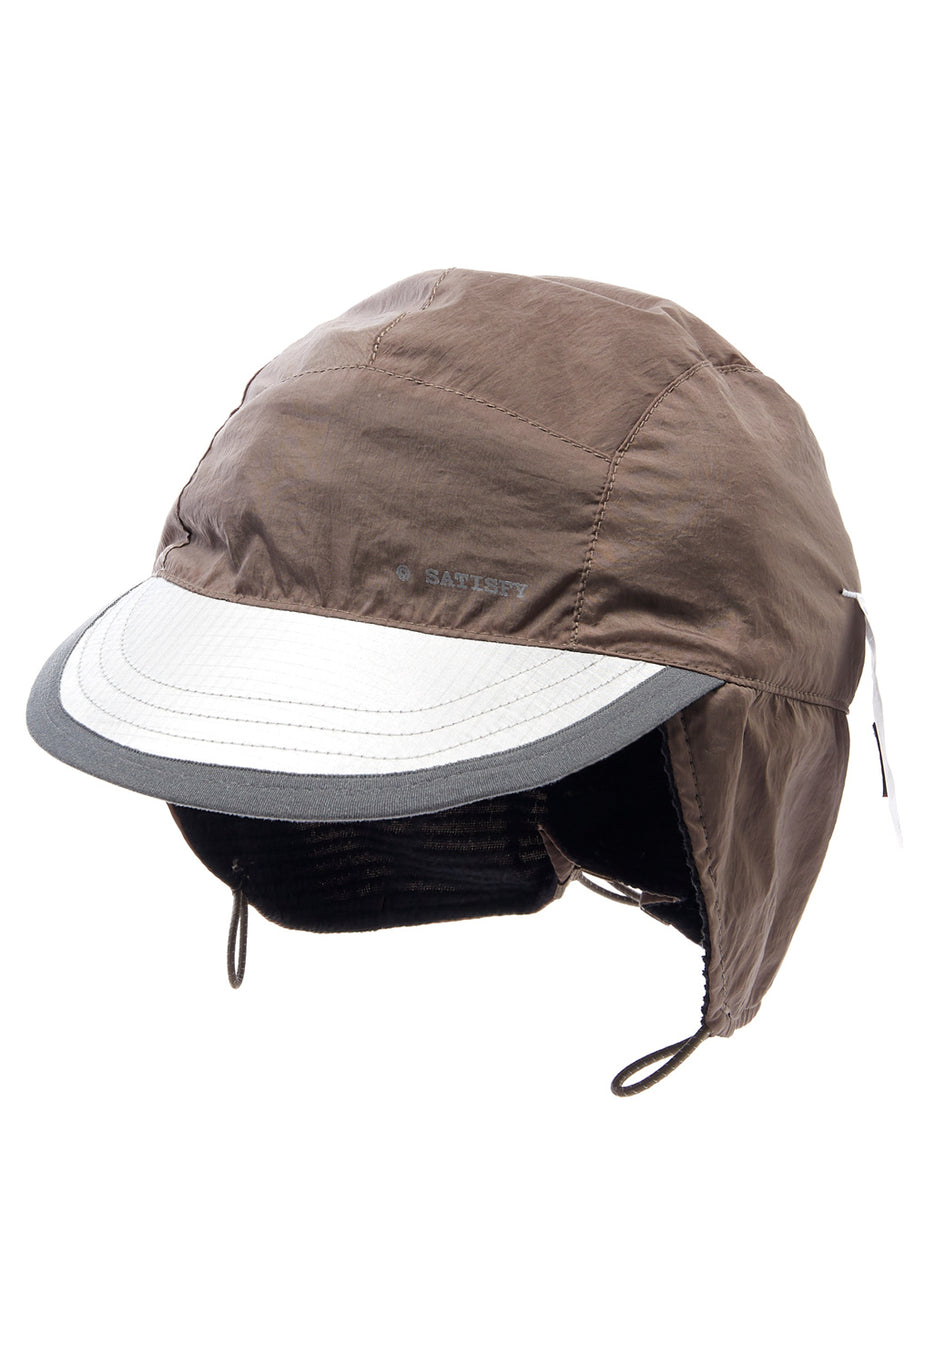 Satisfy Men's FliteSilk Sherpa Hat - Taupe